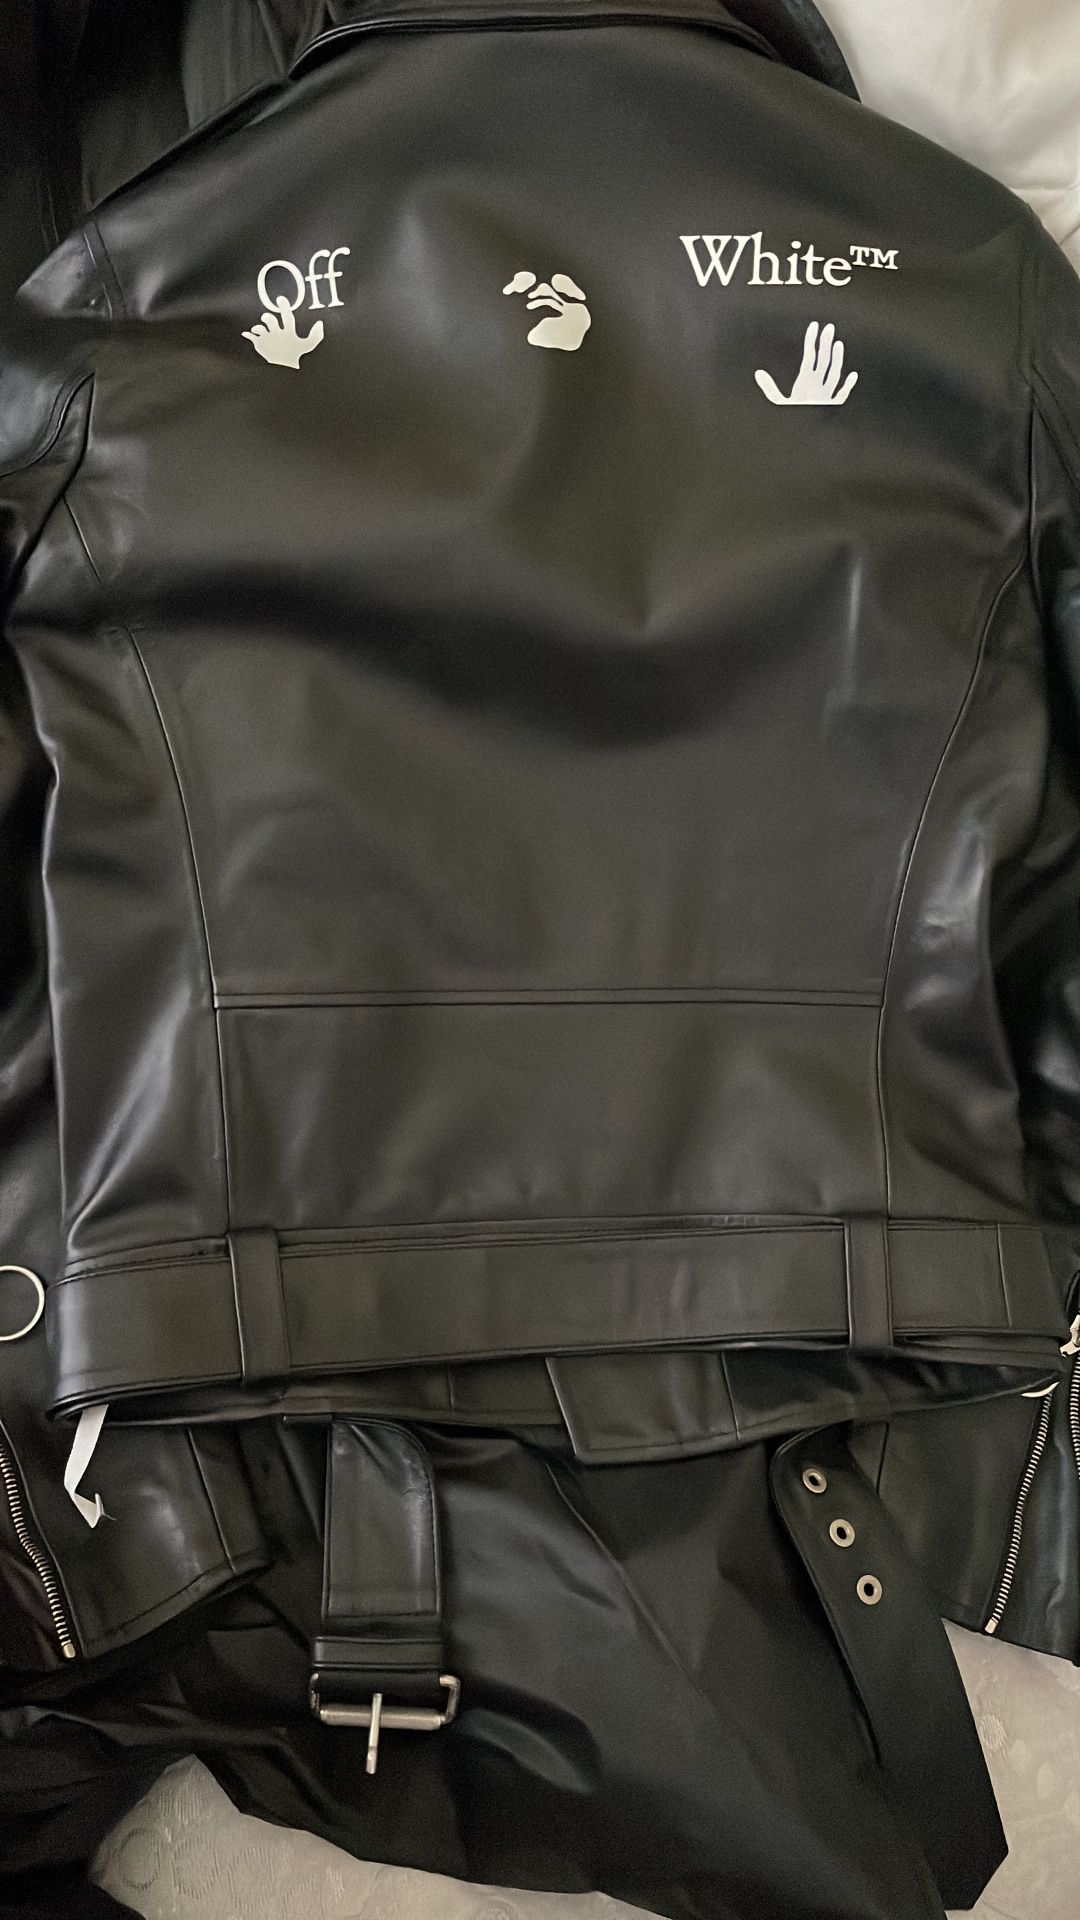 Off-white leather jacket